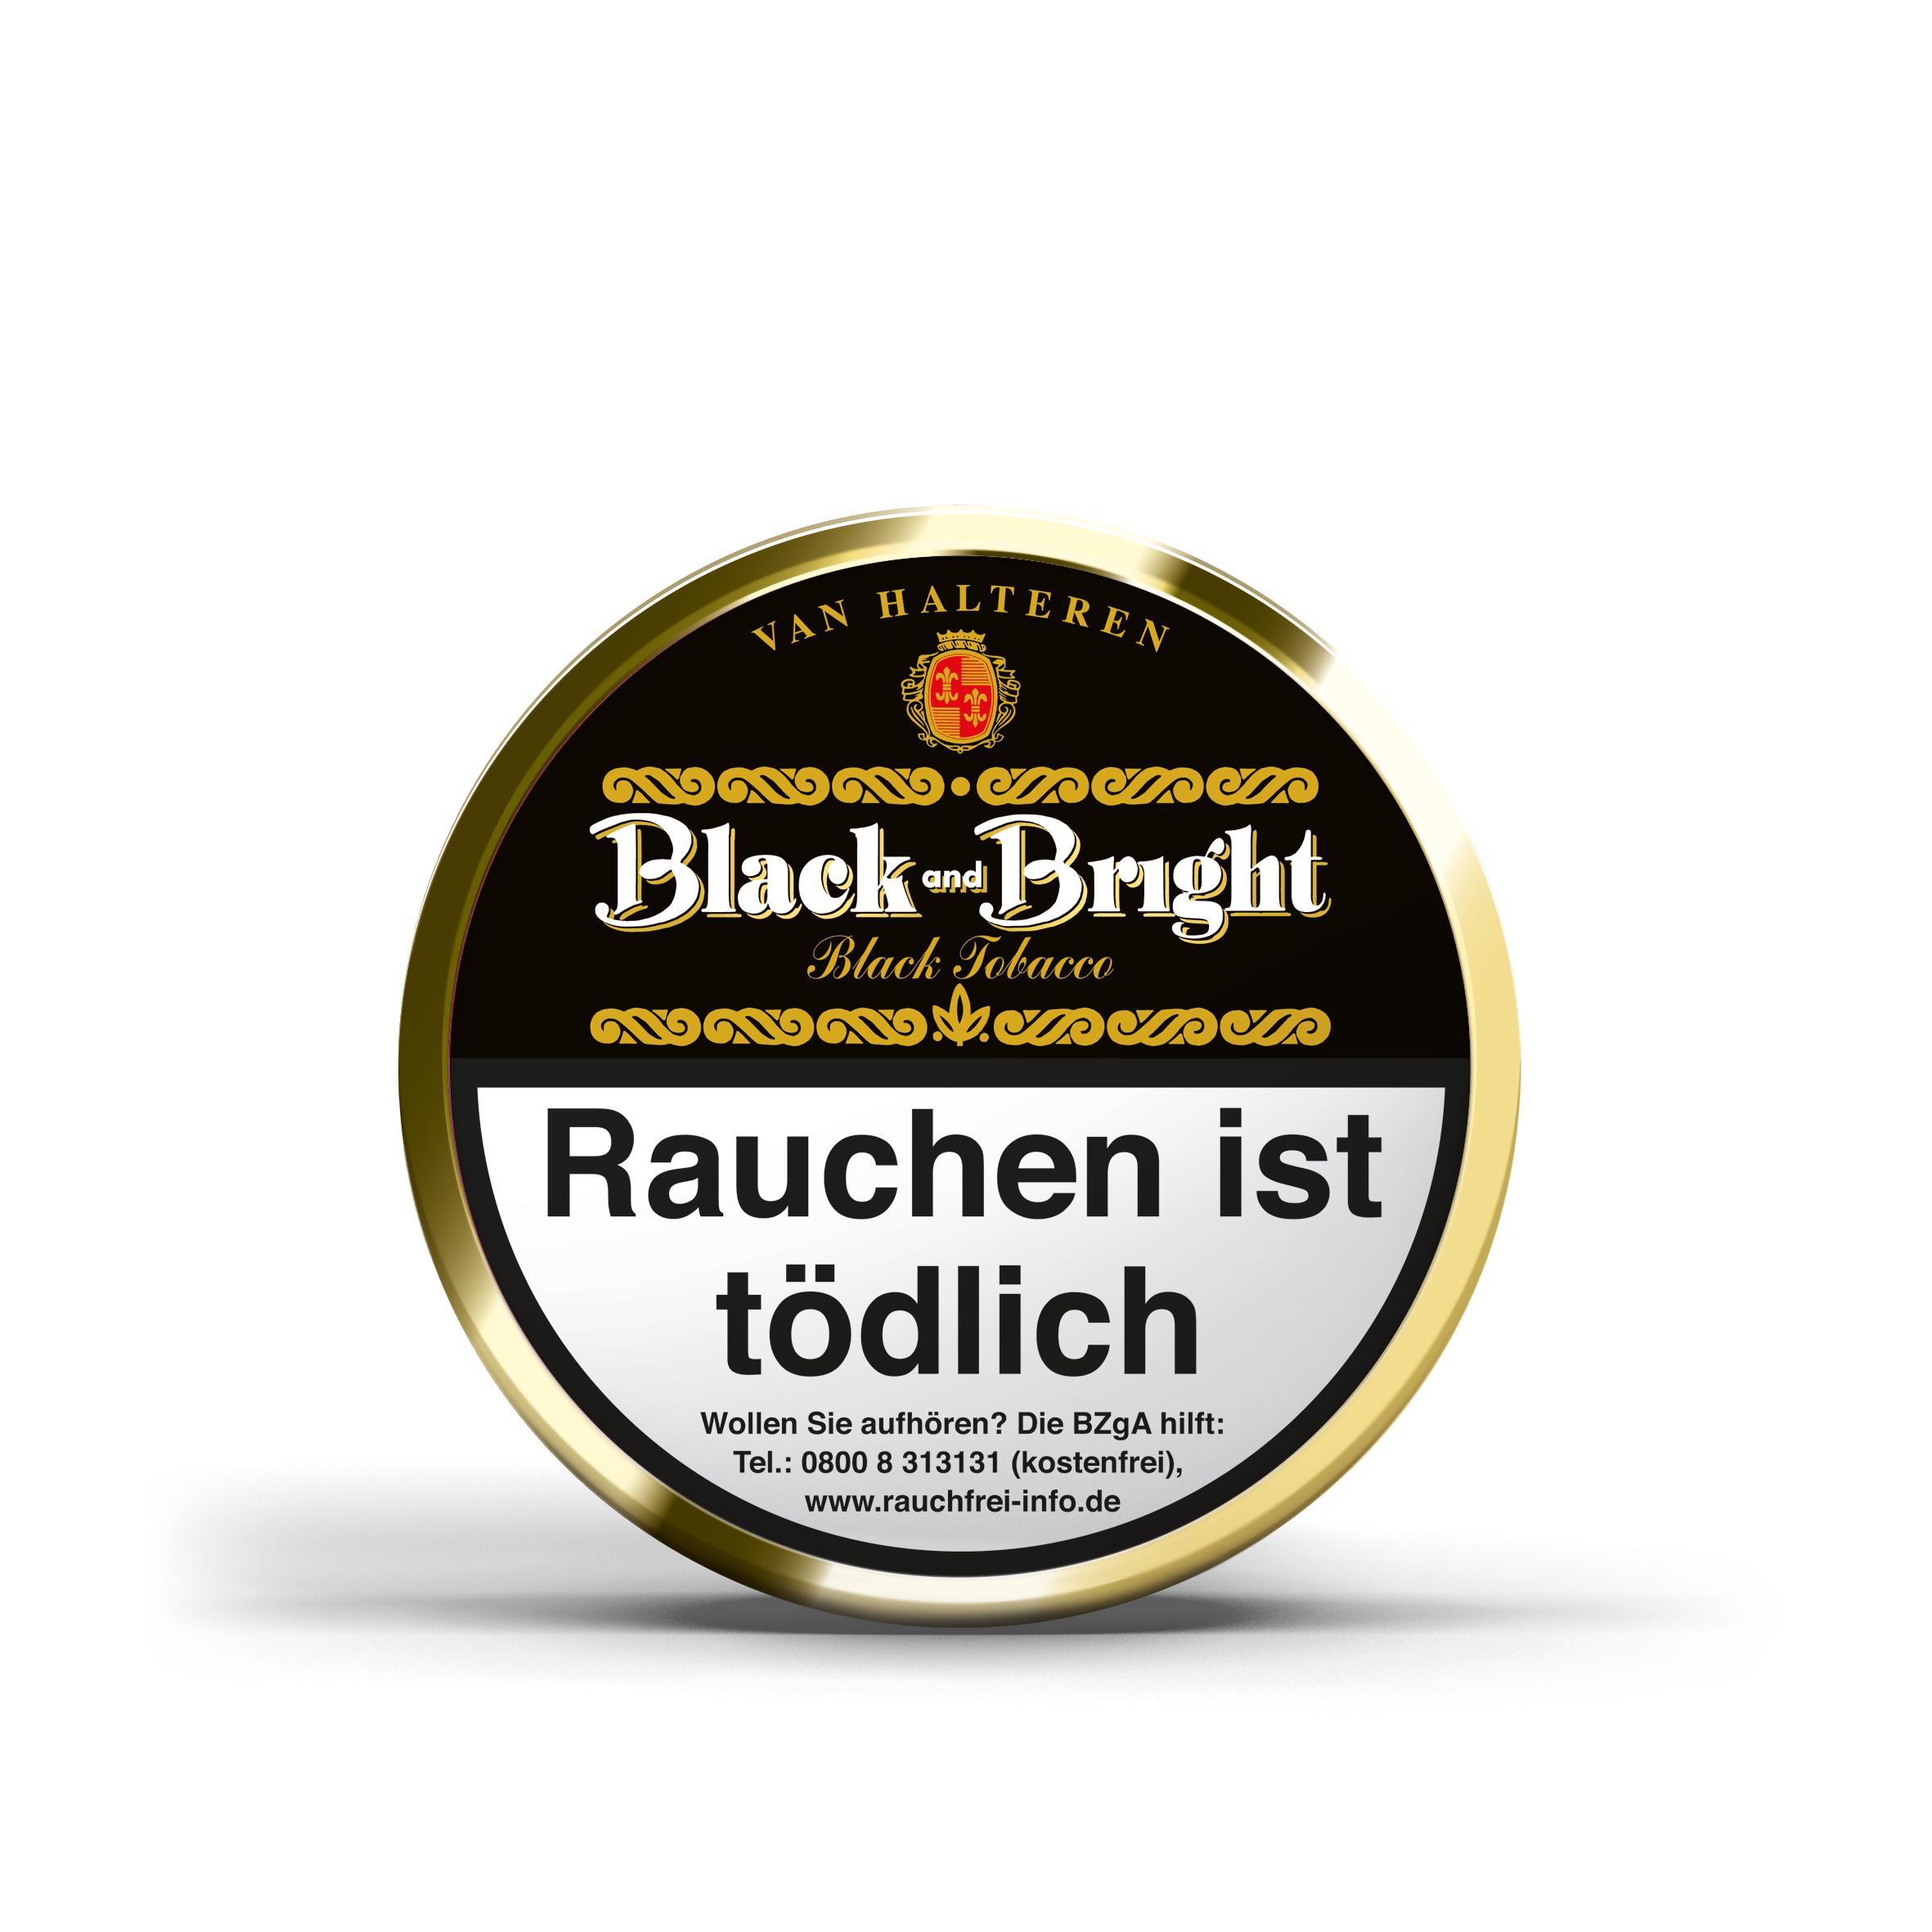 Van Halteren Black & Bright 1 x 100g Pfeifentabak 100g